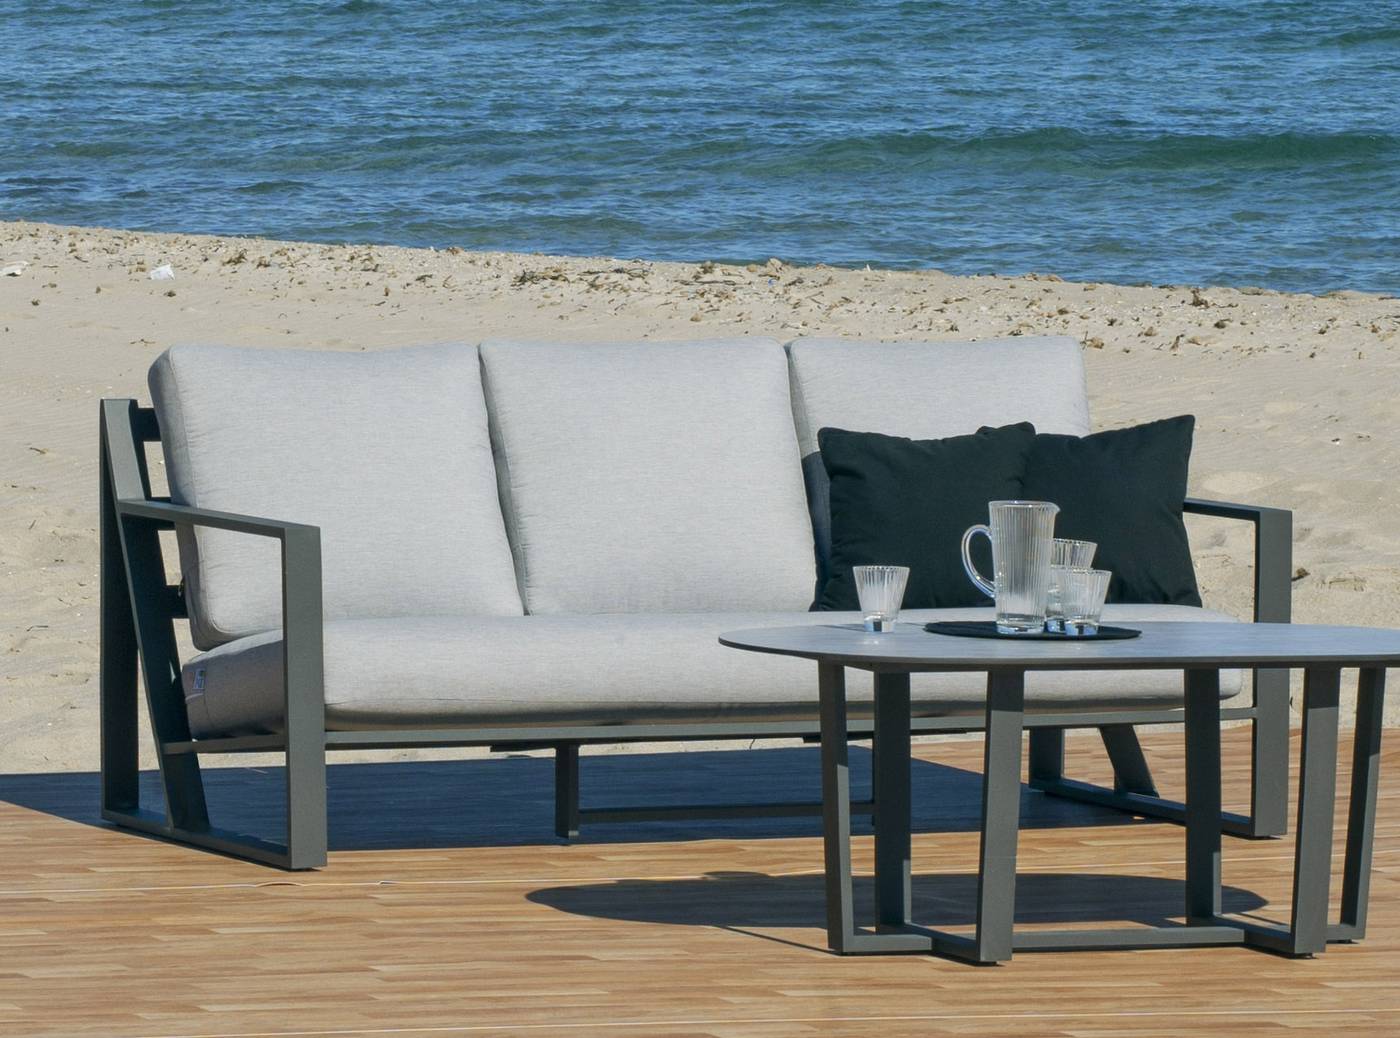 Set Aluminio Luxe Aleli-10 - Lujoso conjunto de aluminio: 1 sofá de 3 plazas + 2 sillones + 2 reposapiés + 1 mesa de centro. Disponible en color blanco, antracita, champagne, plata o marrón.